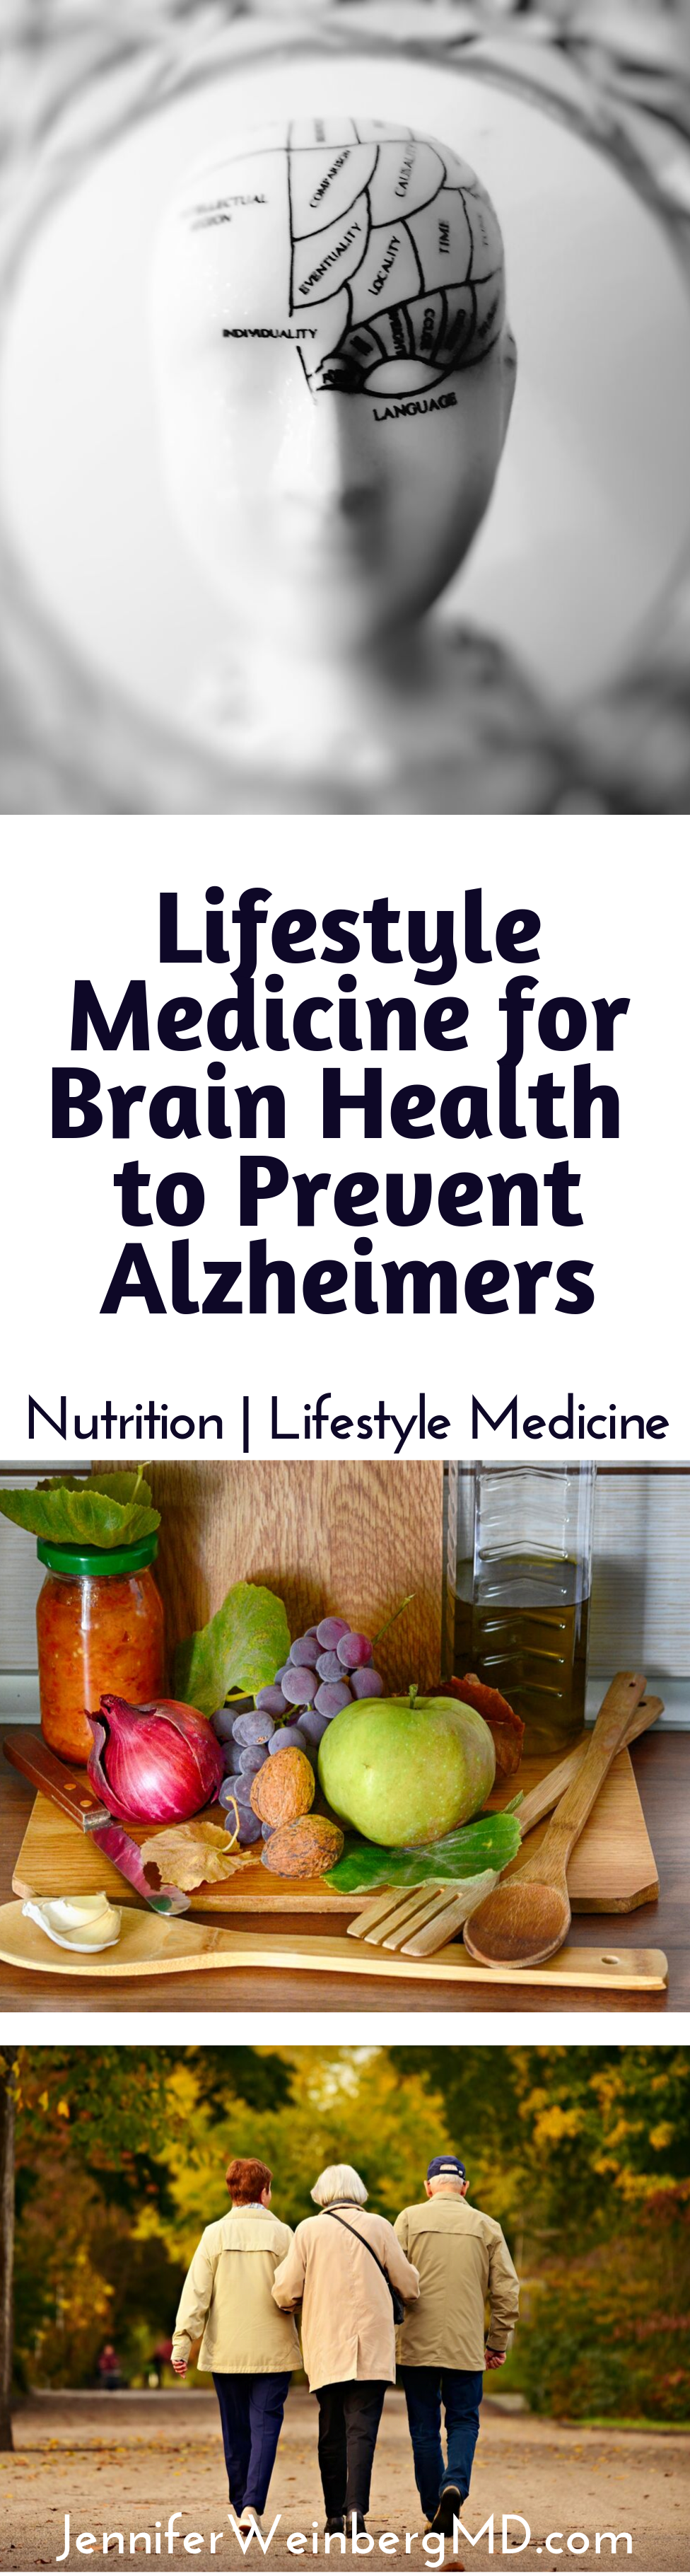 Alzheimer's Prevention Using Lifestyle Medicine Strategies for a Healthy Brain {Lifestyle Medicine | Nutrition}